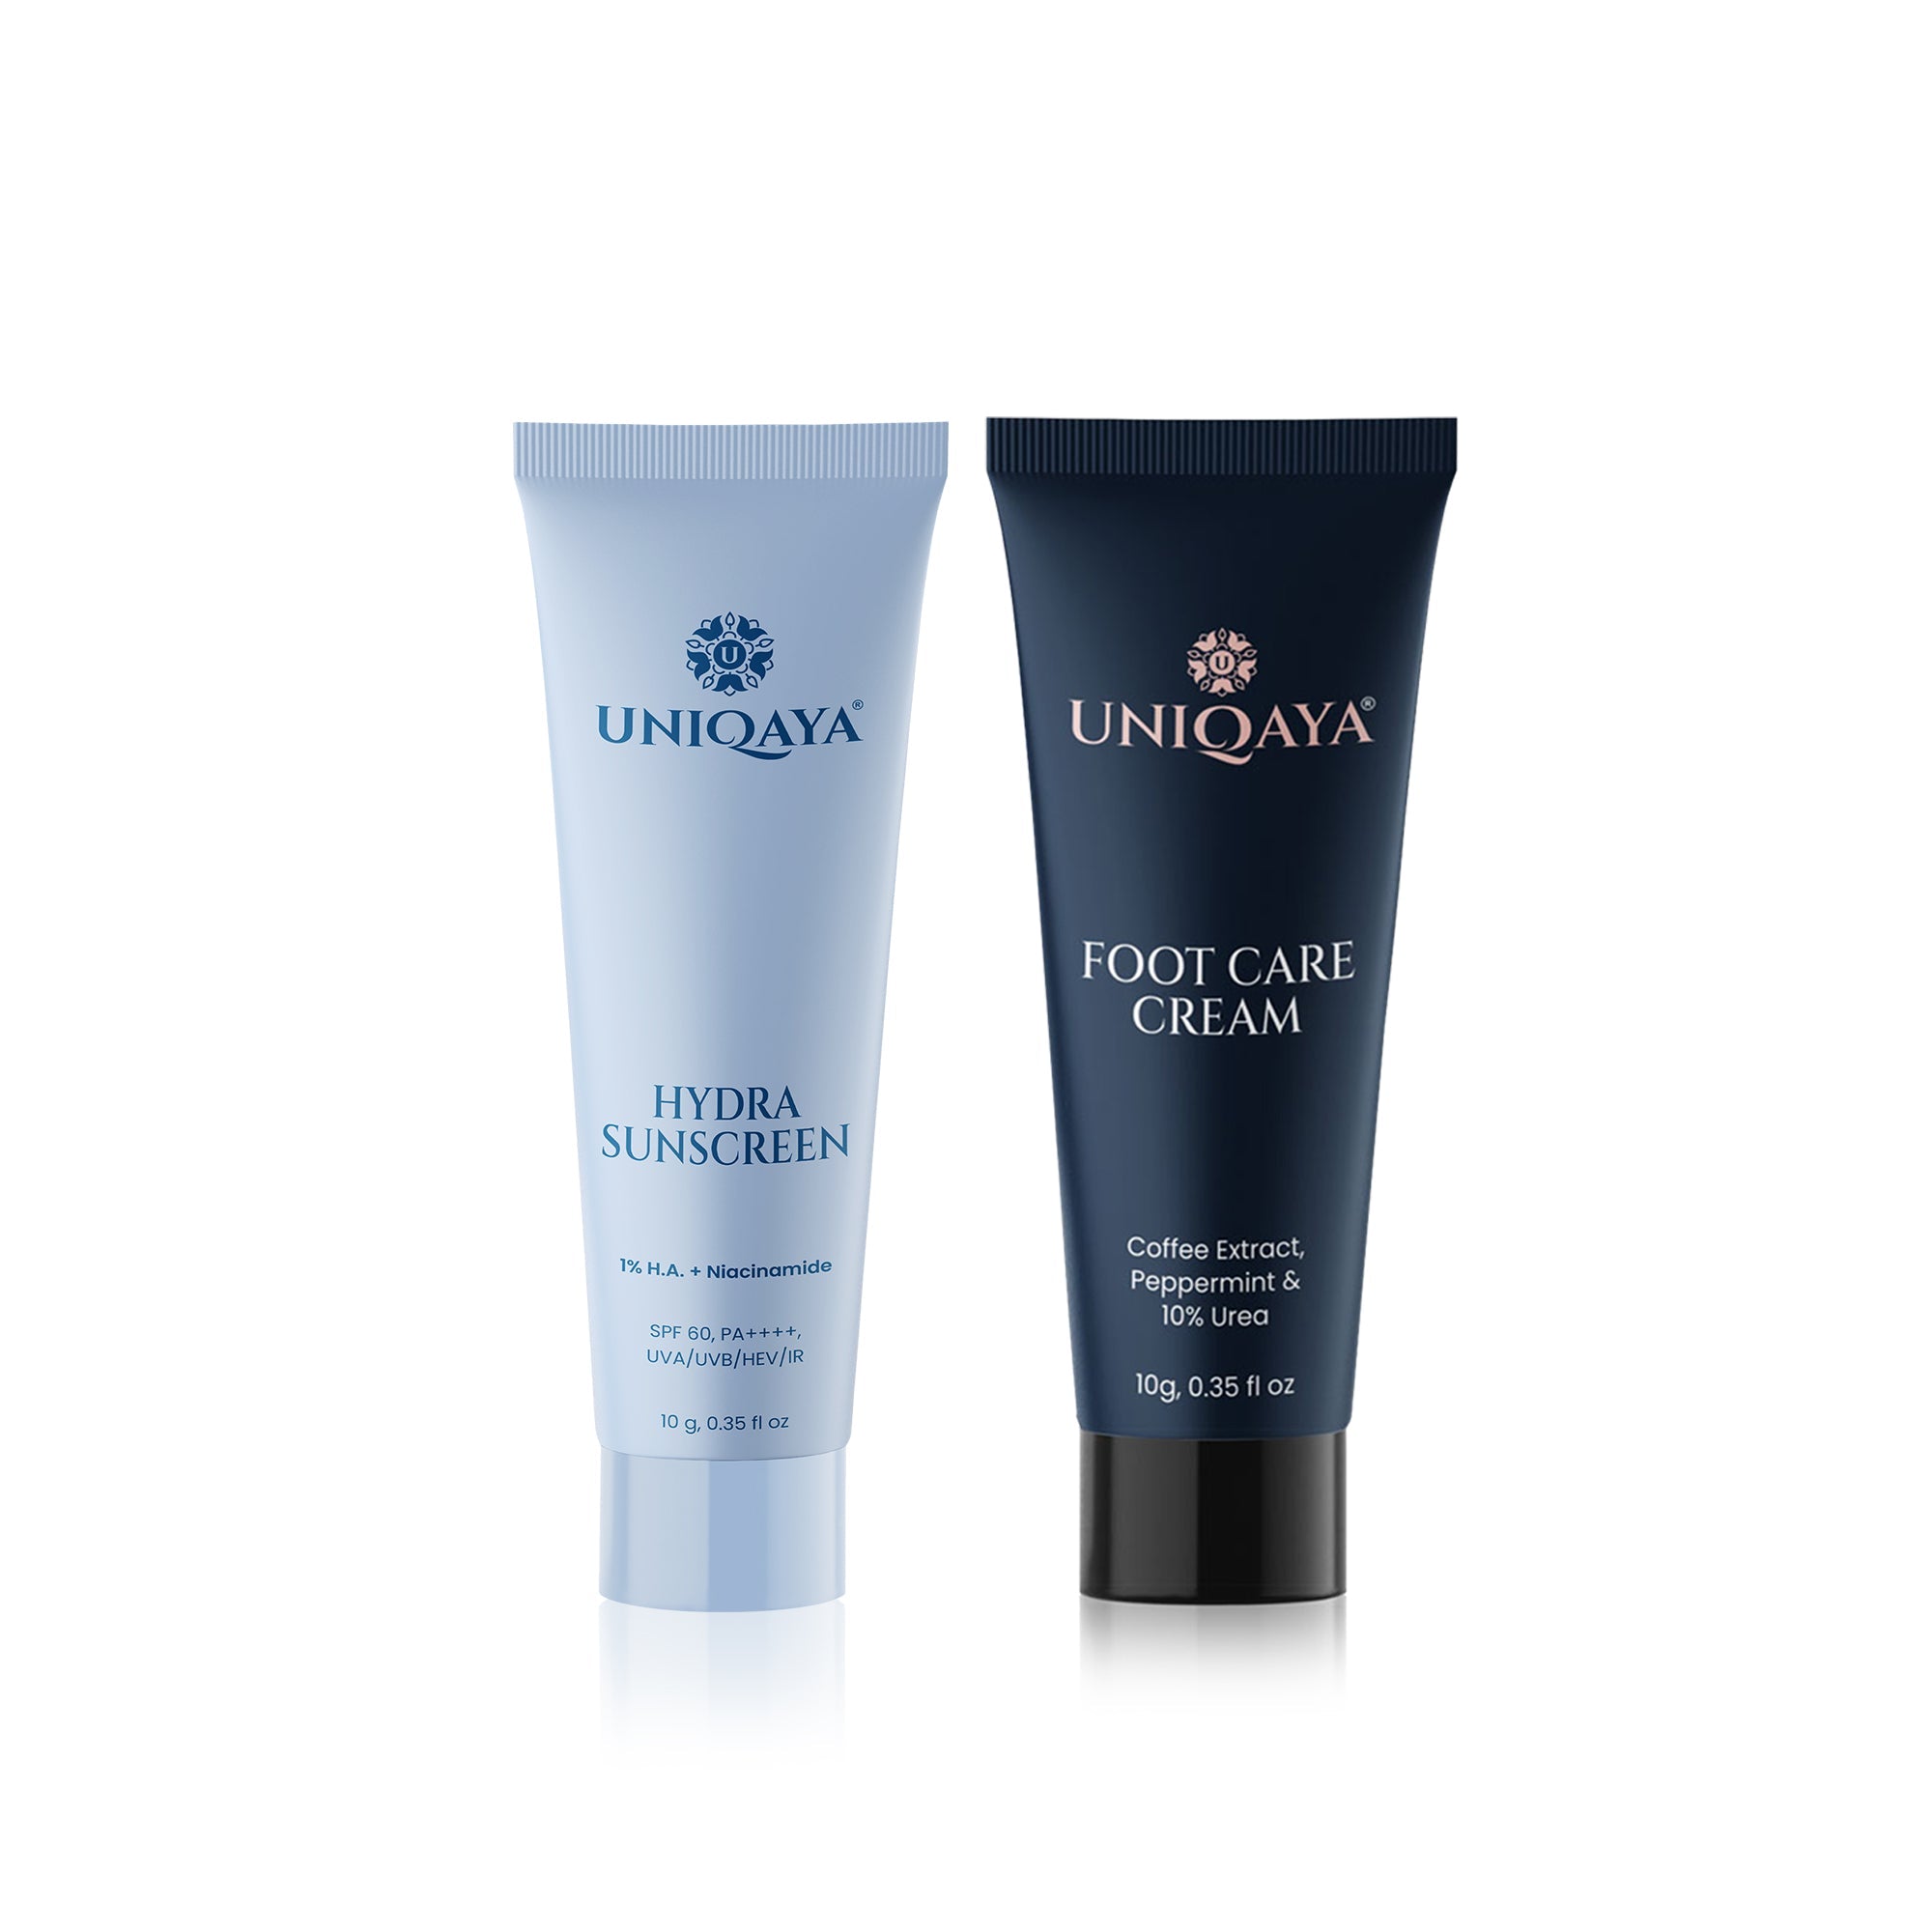 Uniqaya Hydra Sunscreen and Foot Cream Trial Pack